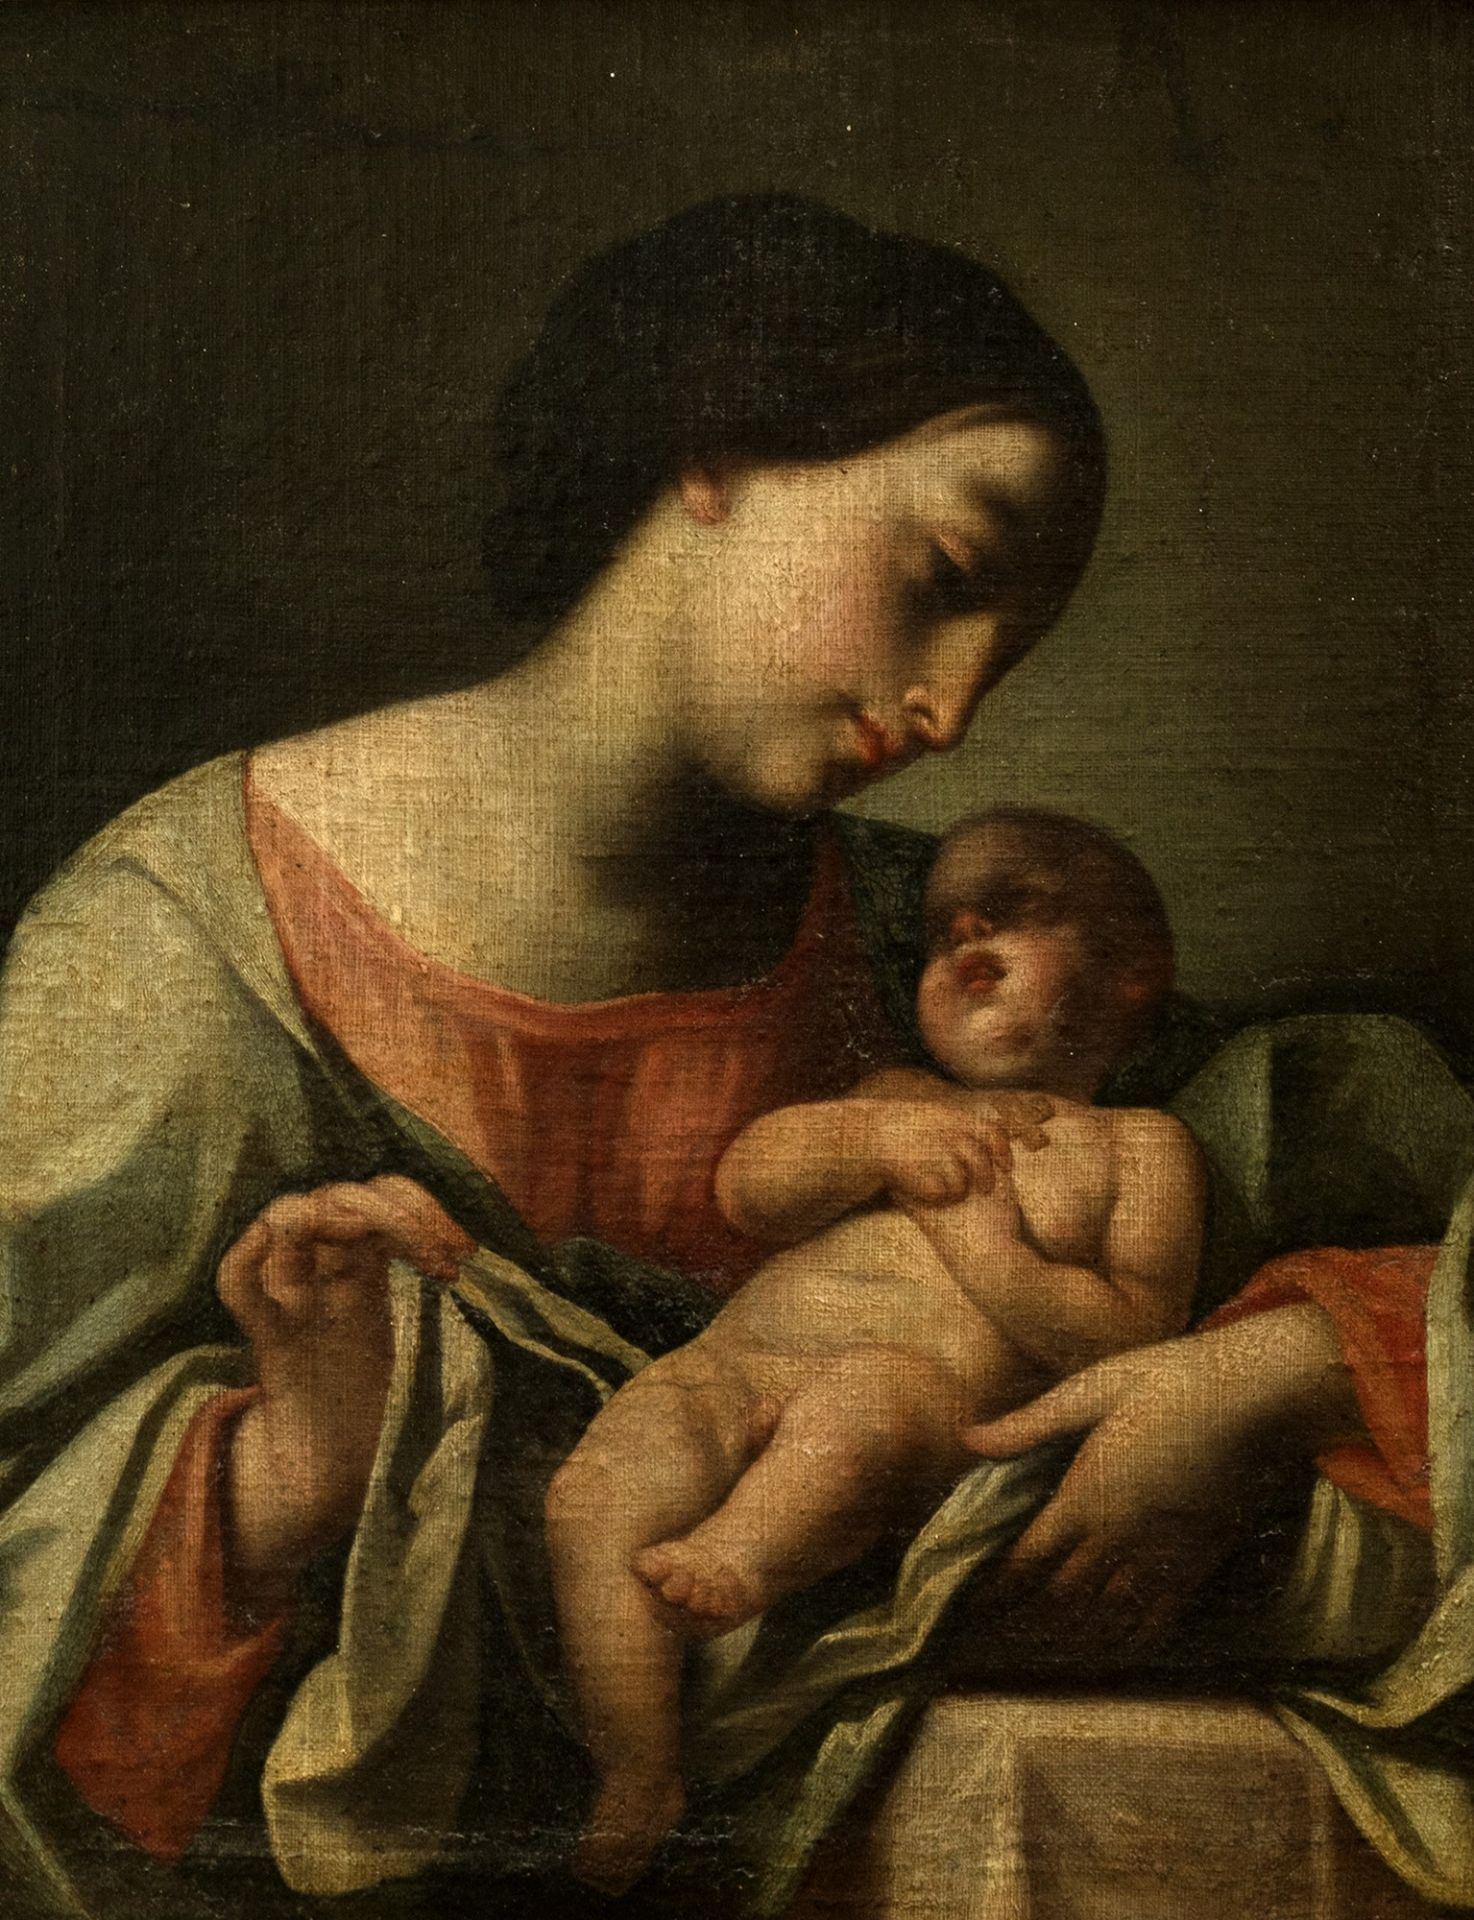 Scuola emiliana, secolo XVII - Madonna with Child